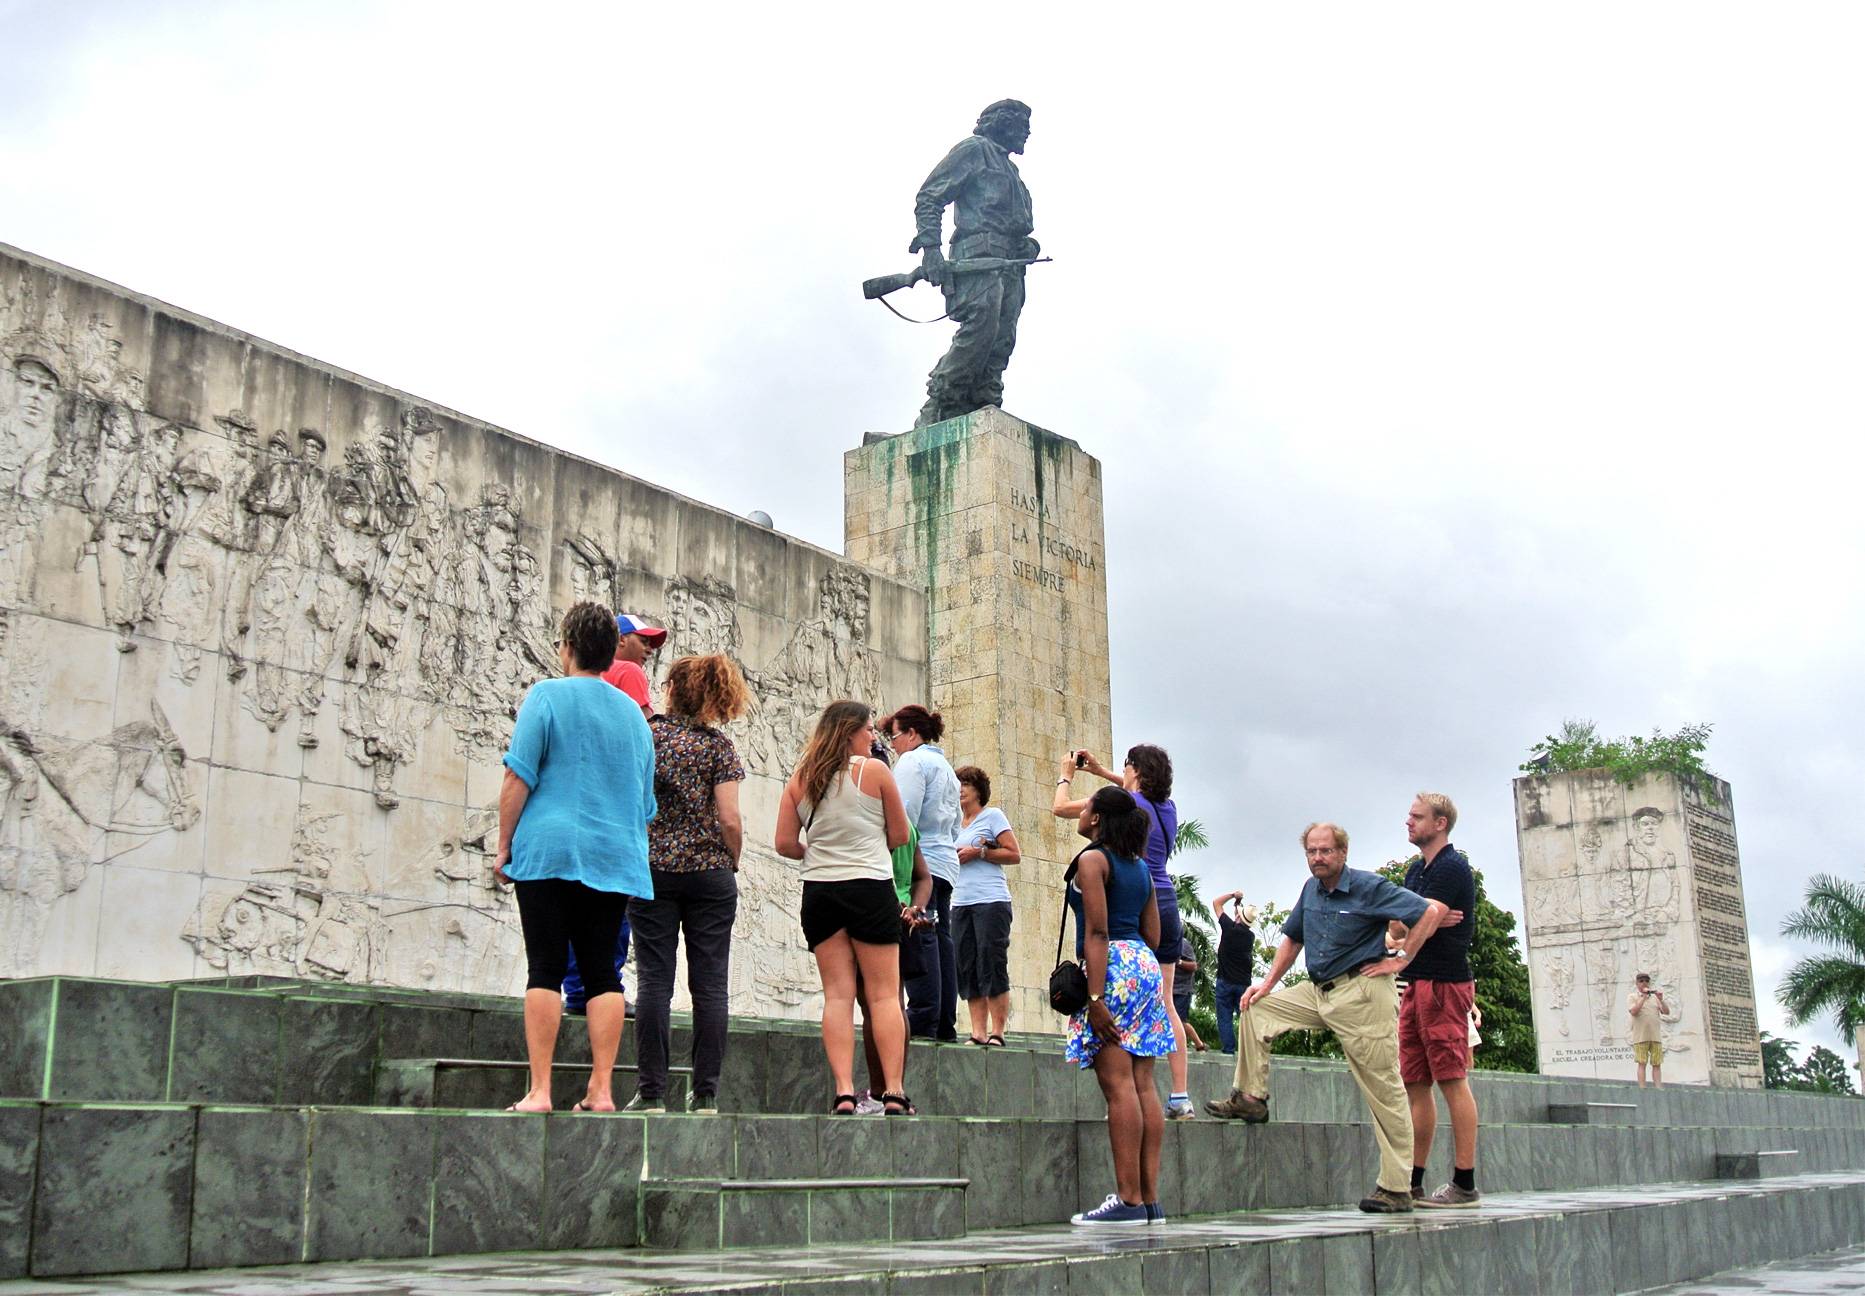 Large bronze Che Guevara statue